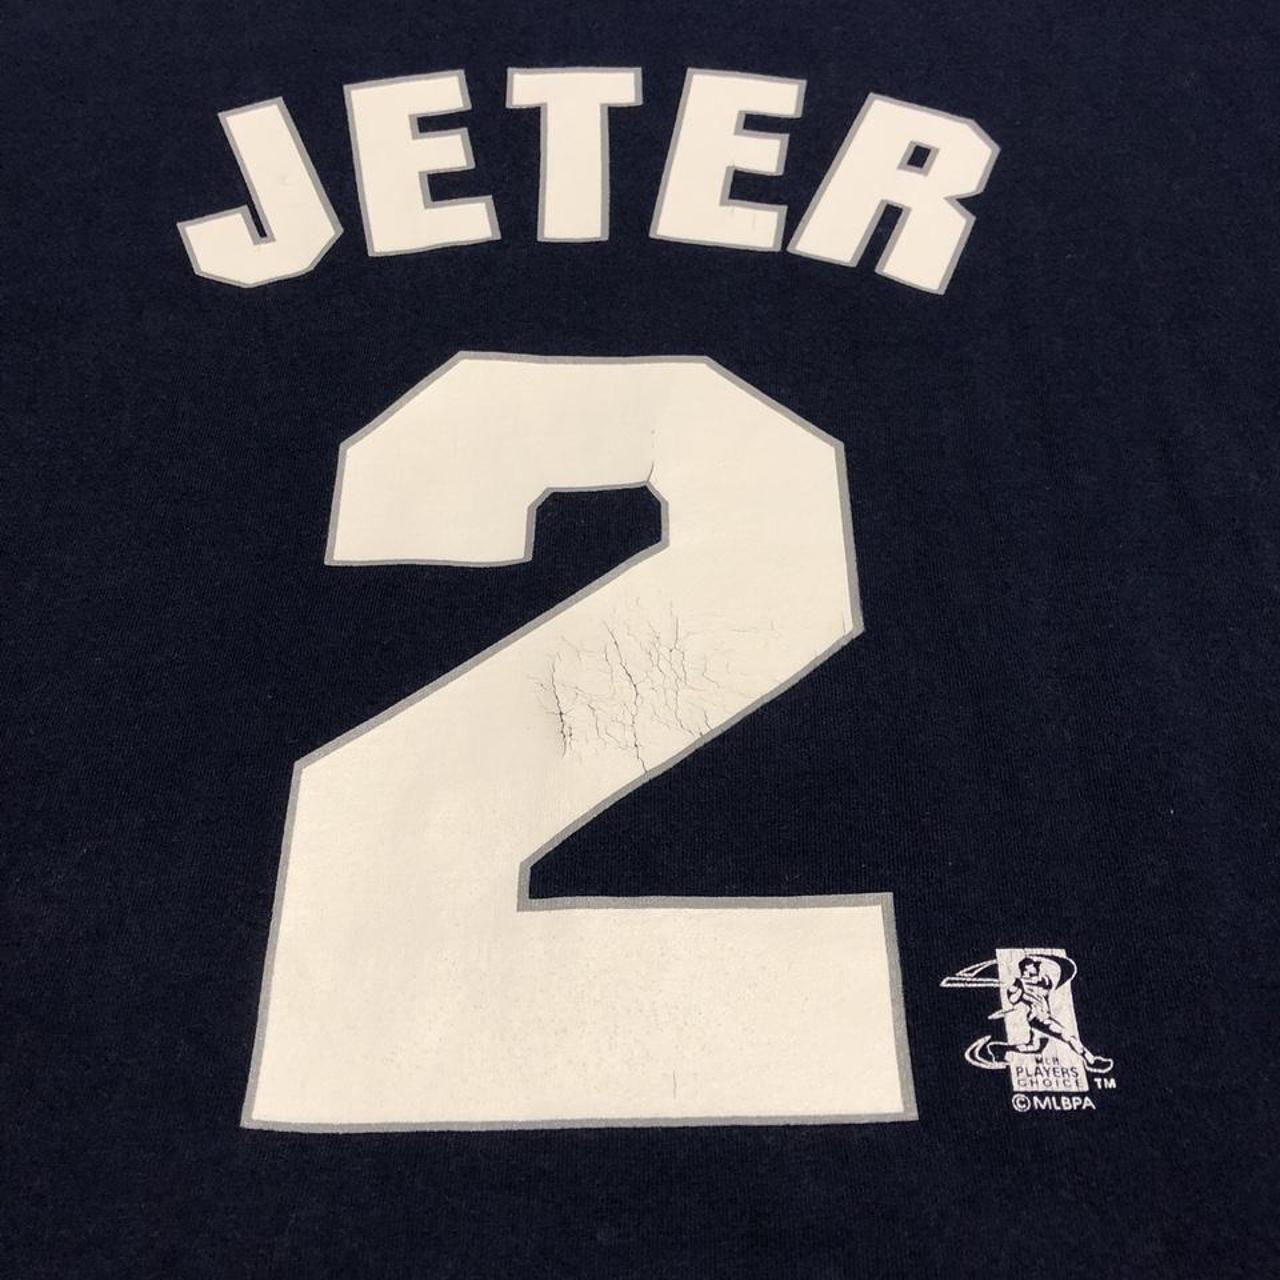 Majestic New York Yankees Derek Jeter player - Depop